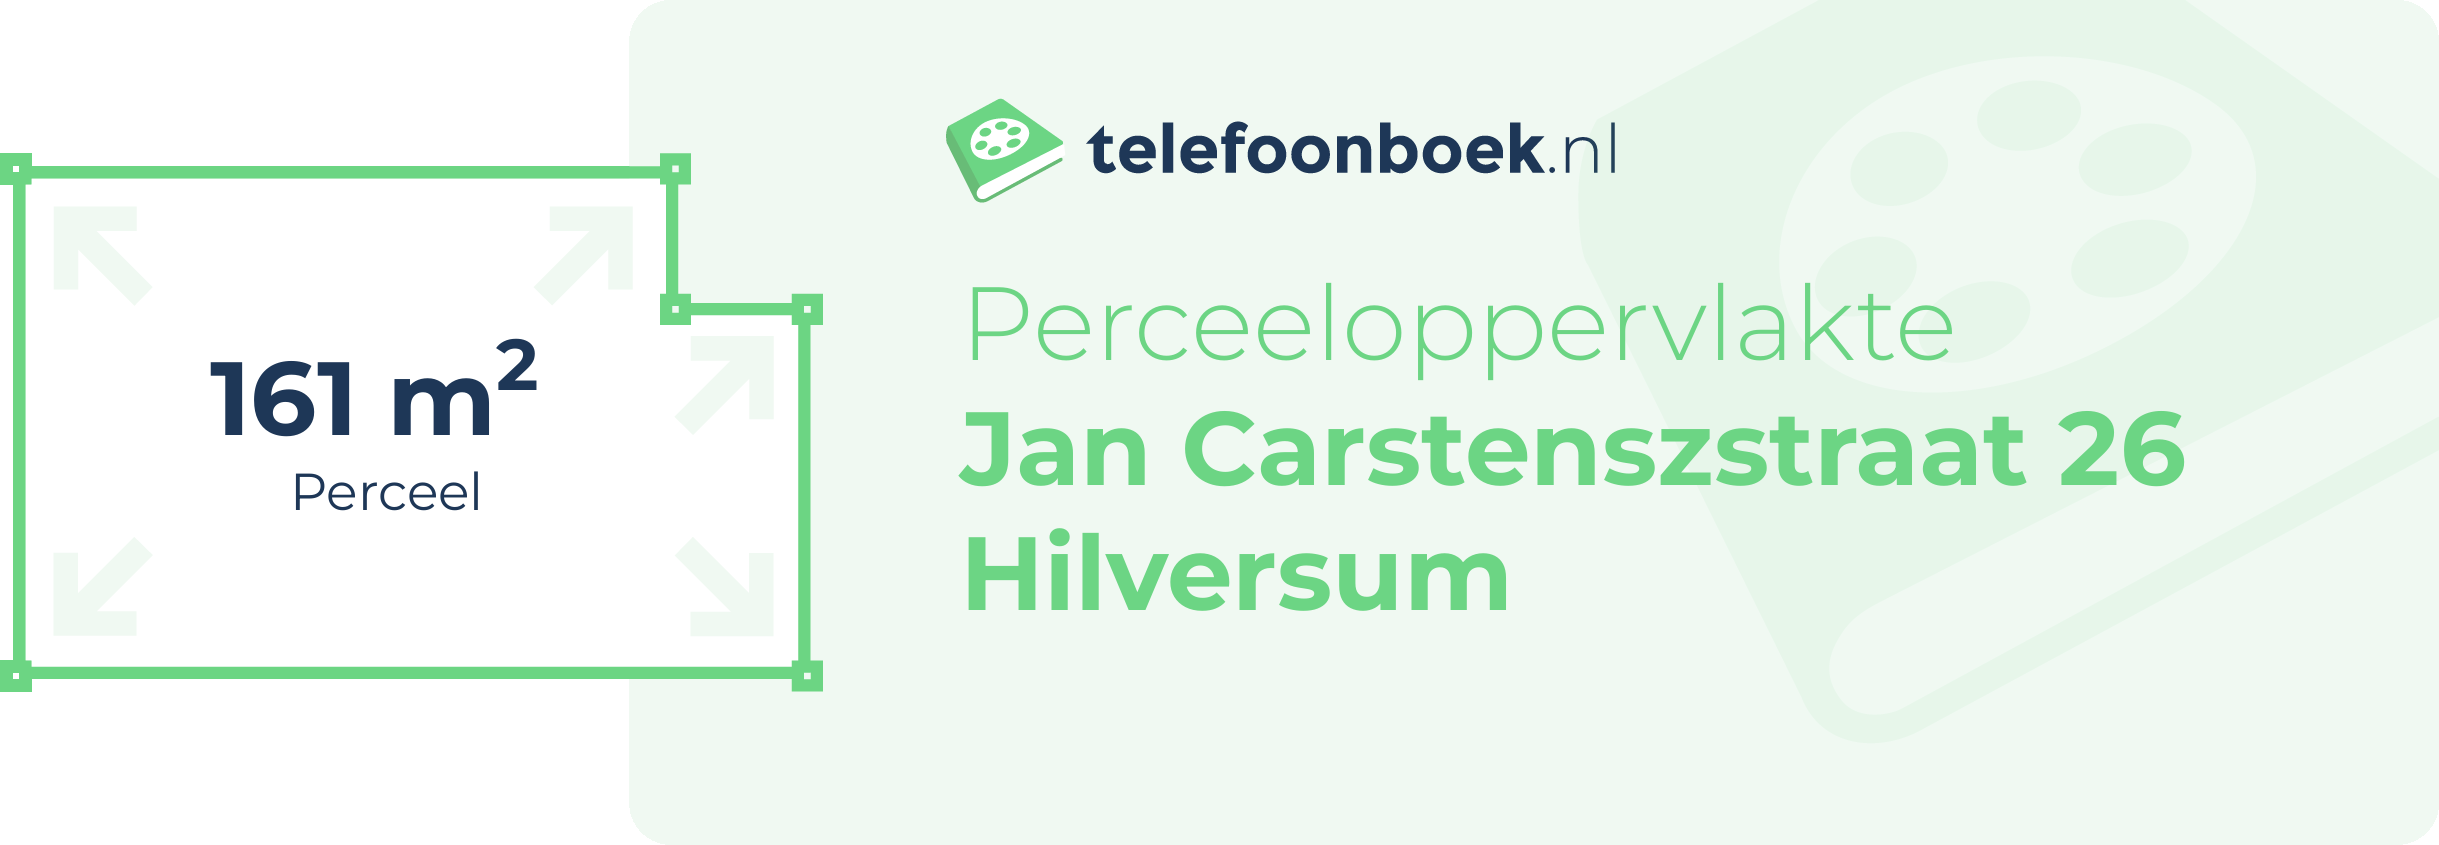 Perceeloppervlakte Jan Carstenszstraat 26 Hilversum